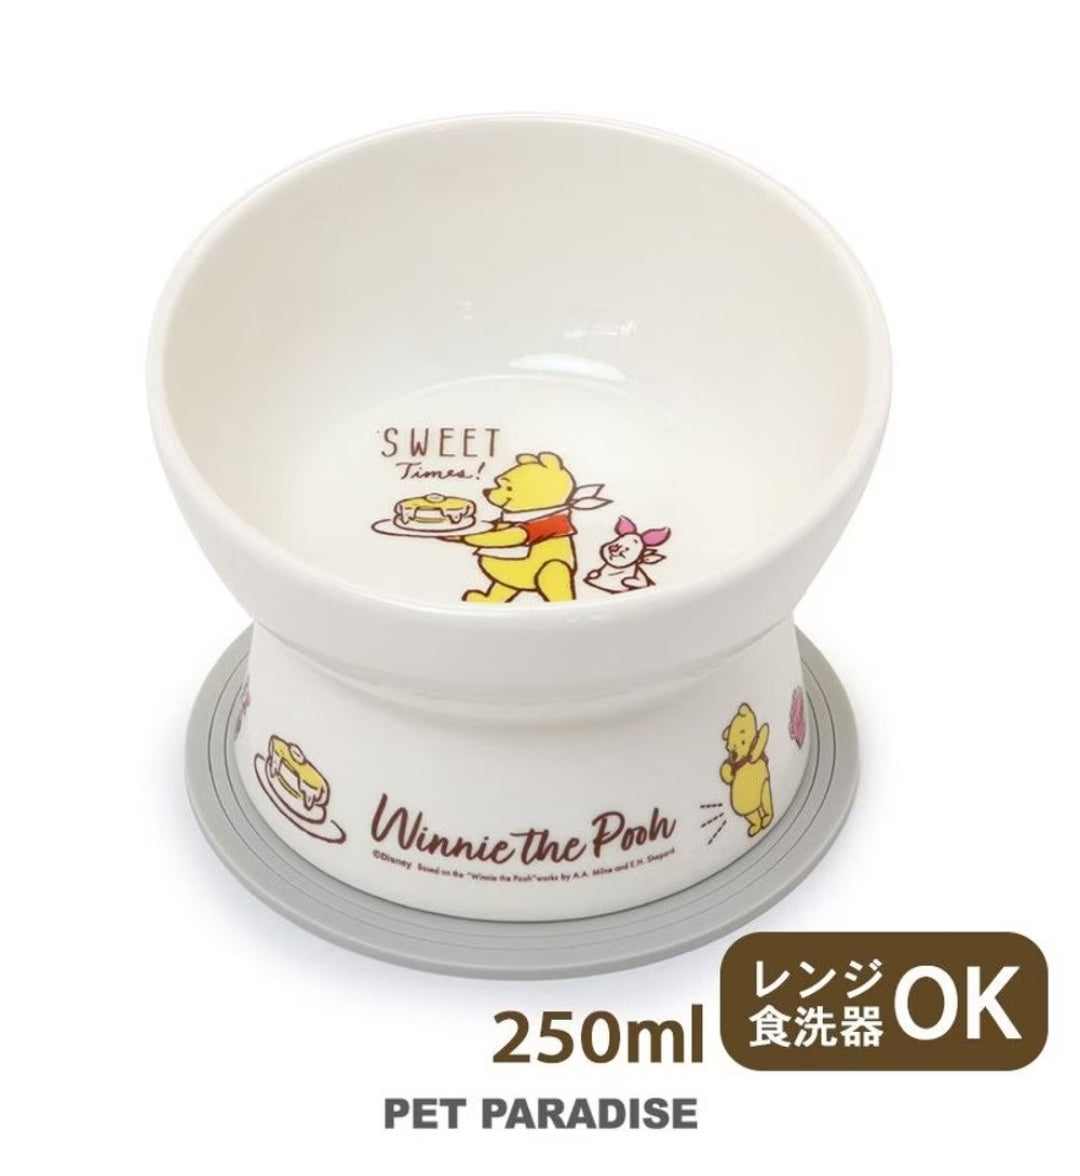 Pet Paradise Disney Winnie the Pooh Tall Food Bowl 250ml